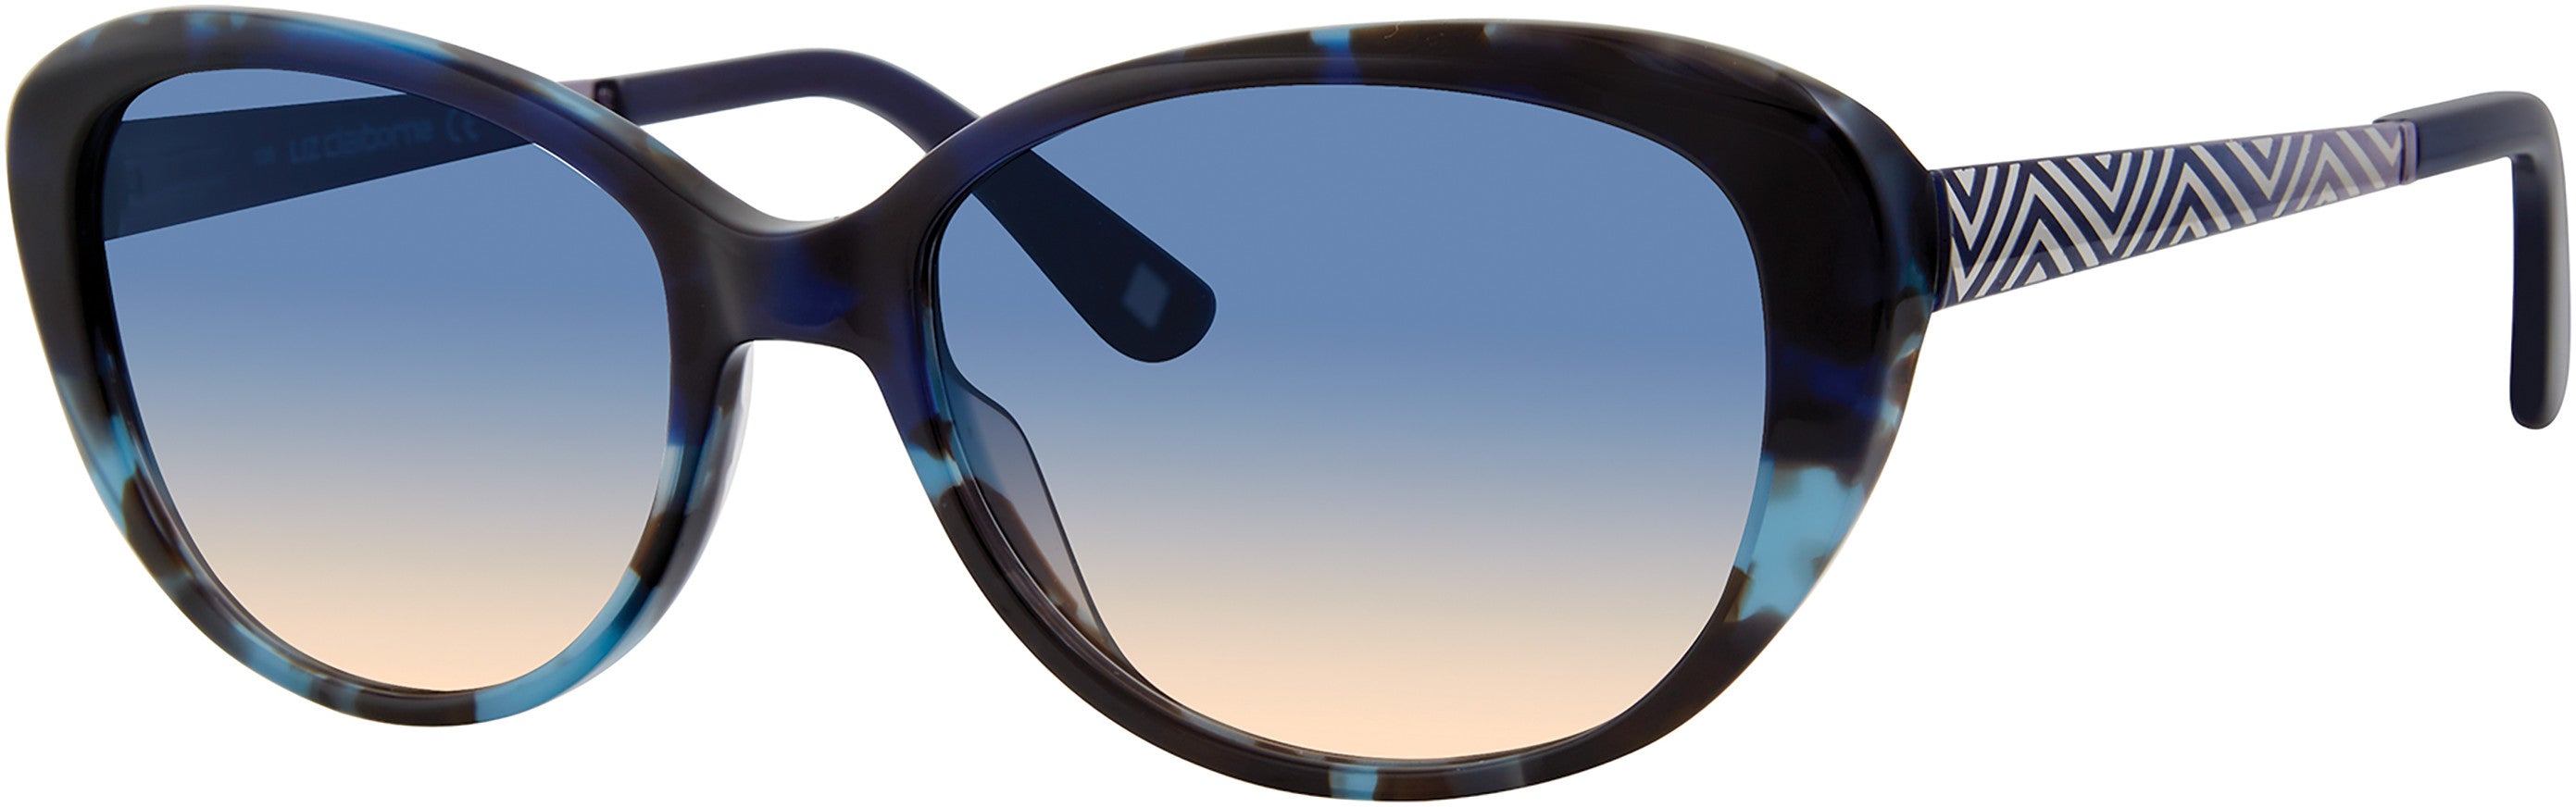  Liz Claiborne 571/S Oval Modified Sunglasses 0IPR-0IPR  Havana Blue (I4 Blue Gradient)